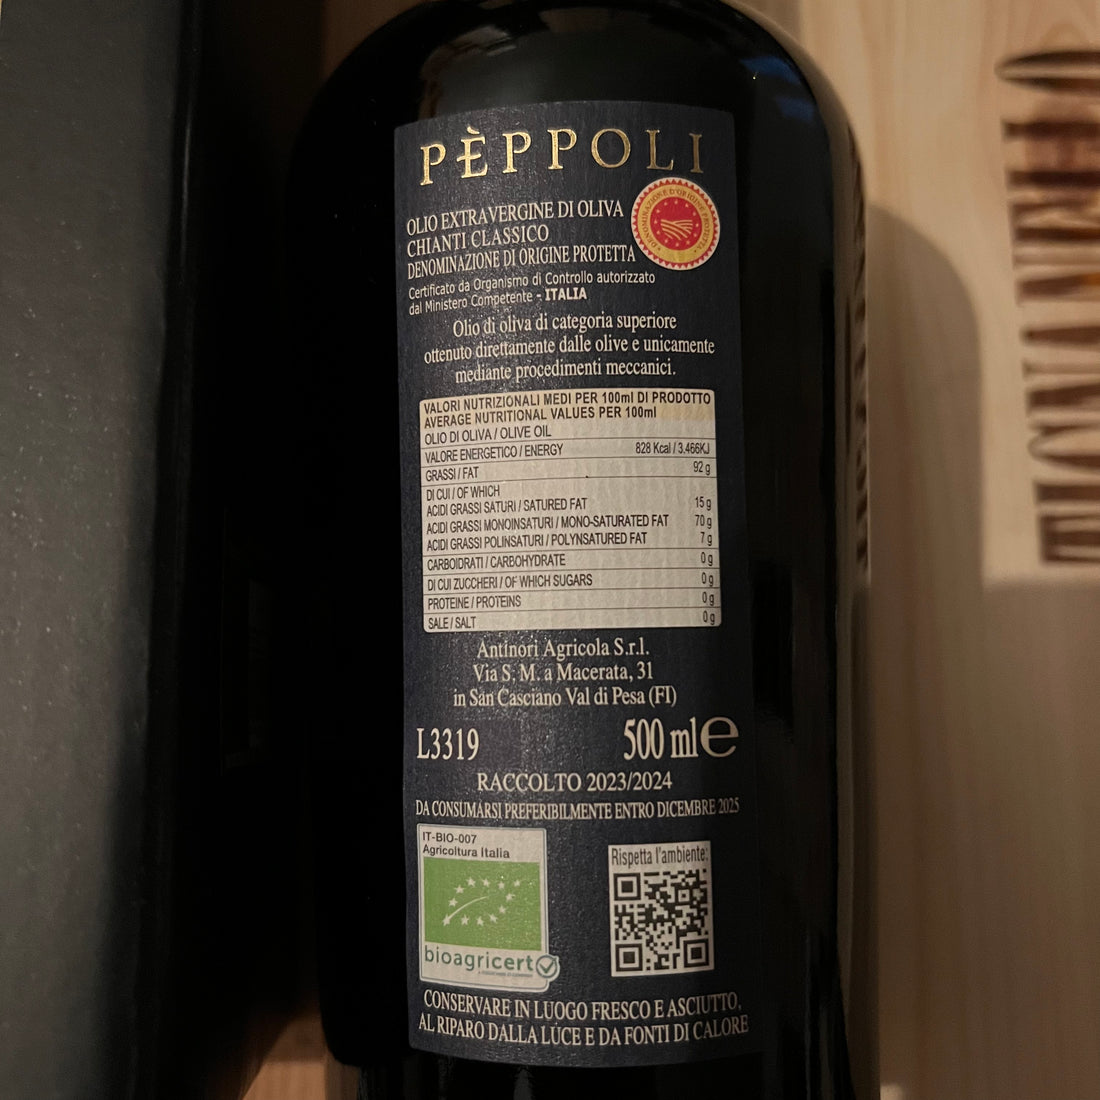 Olio Extravergine di Oliva Bio Peppoli Chianti Classico DOP 0,5 l 2023/2024 Astucciato Marchesi Antinori